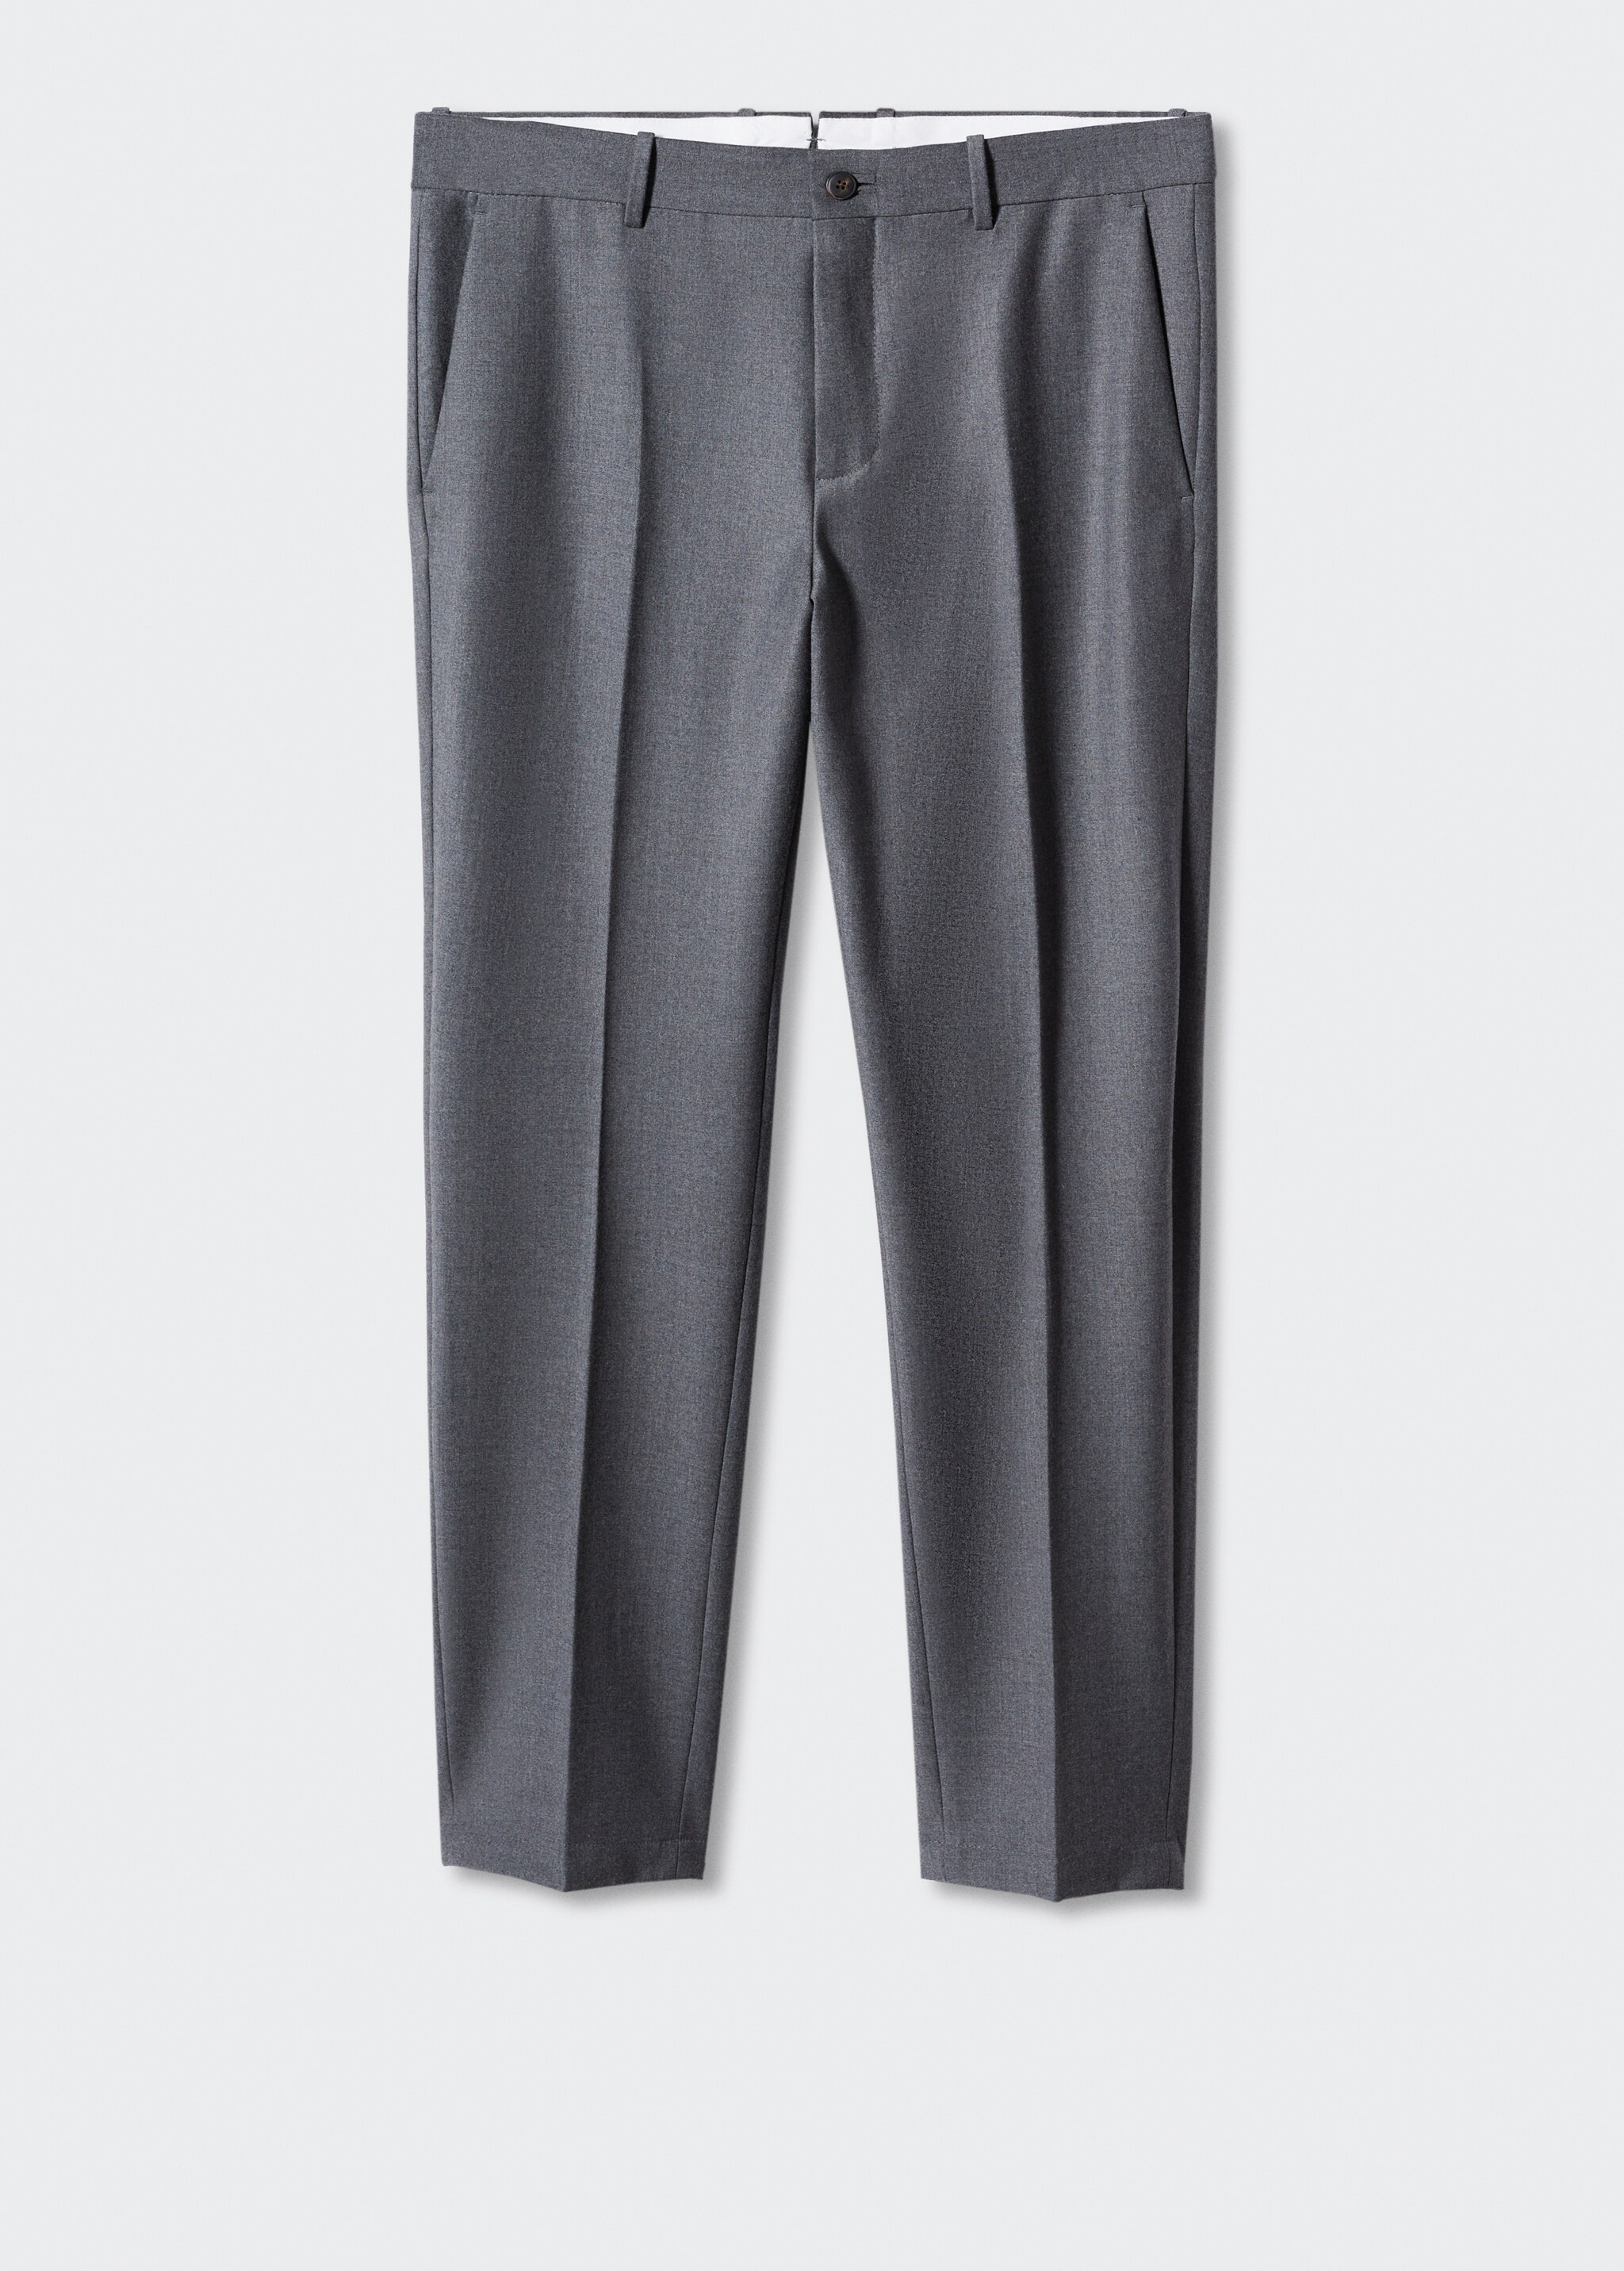 Pantalons slim fit llana - Article sense model